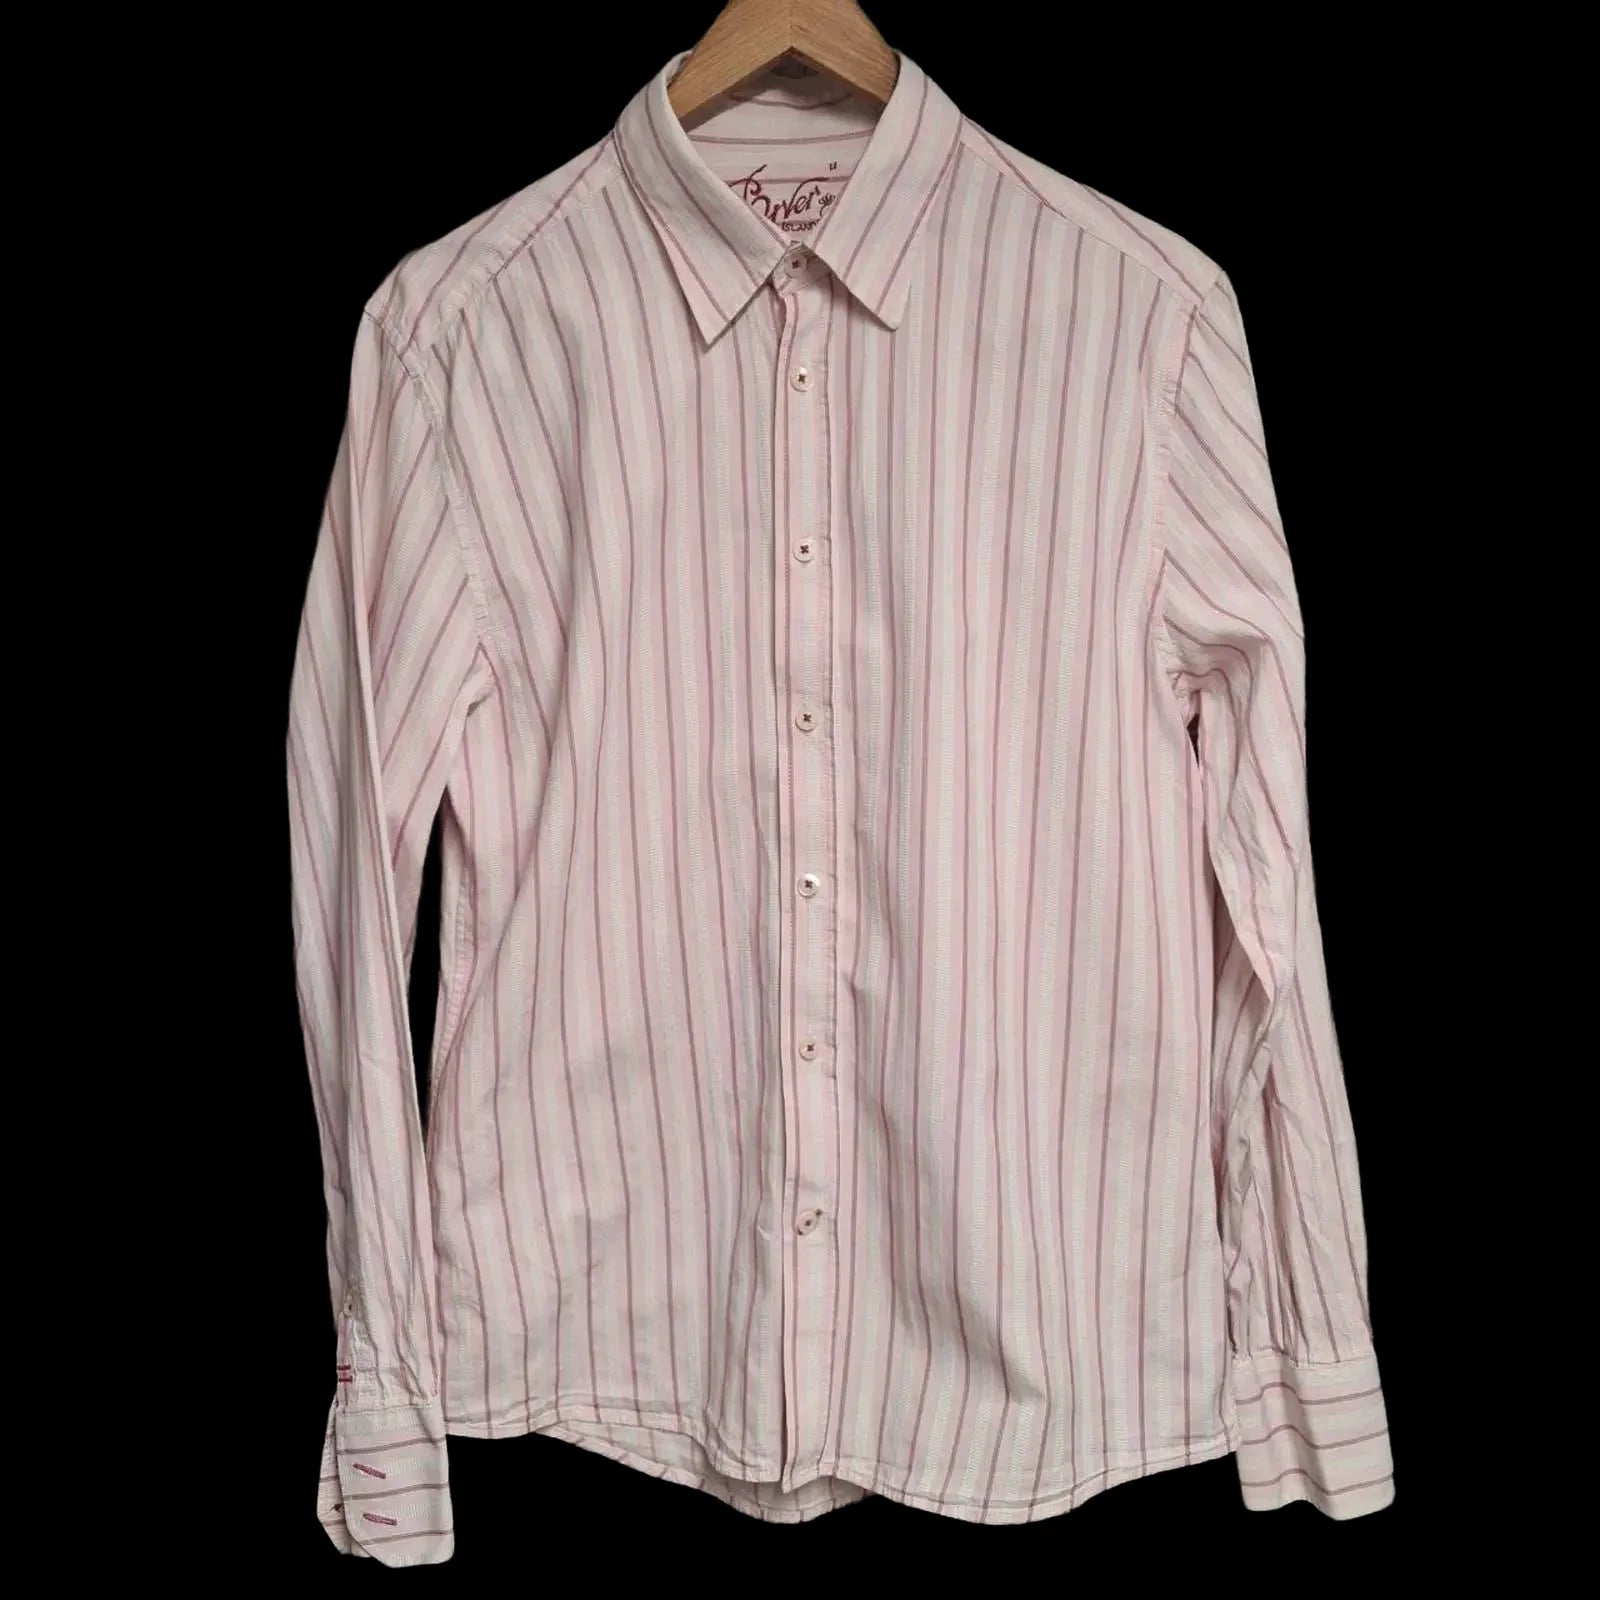 Mens River Island Pink & White Striped Long Sleeve Shirt UK